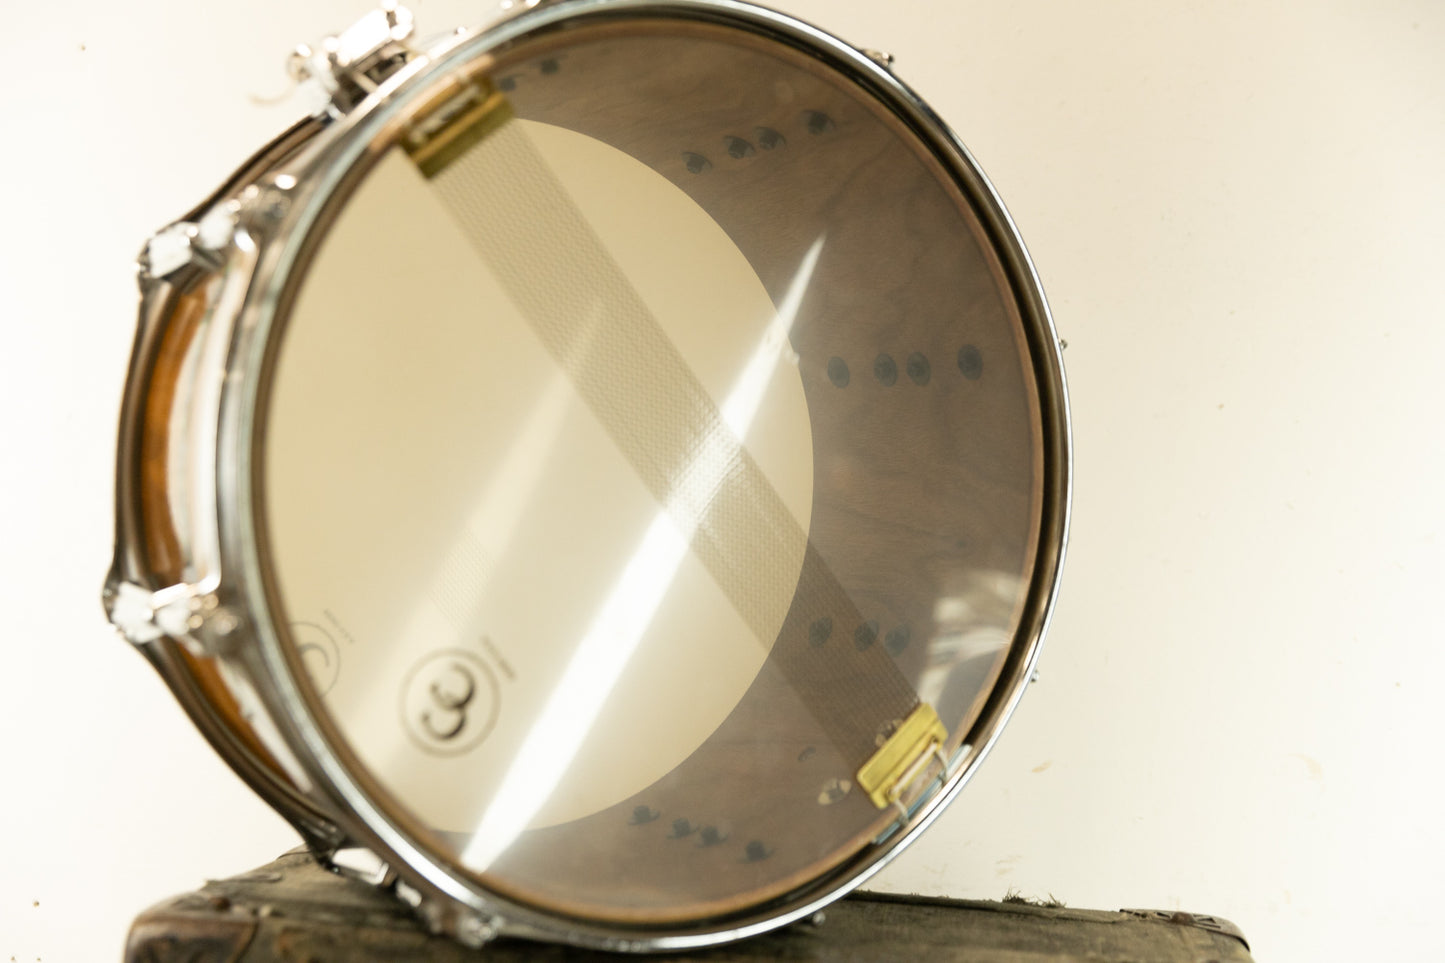 C&C Drum Co. 6.5x14 Maple Abalone Snare Drum